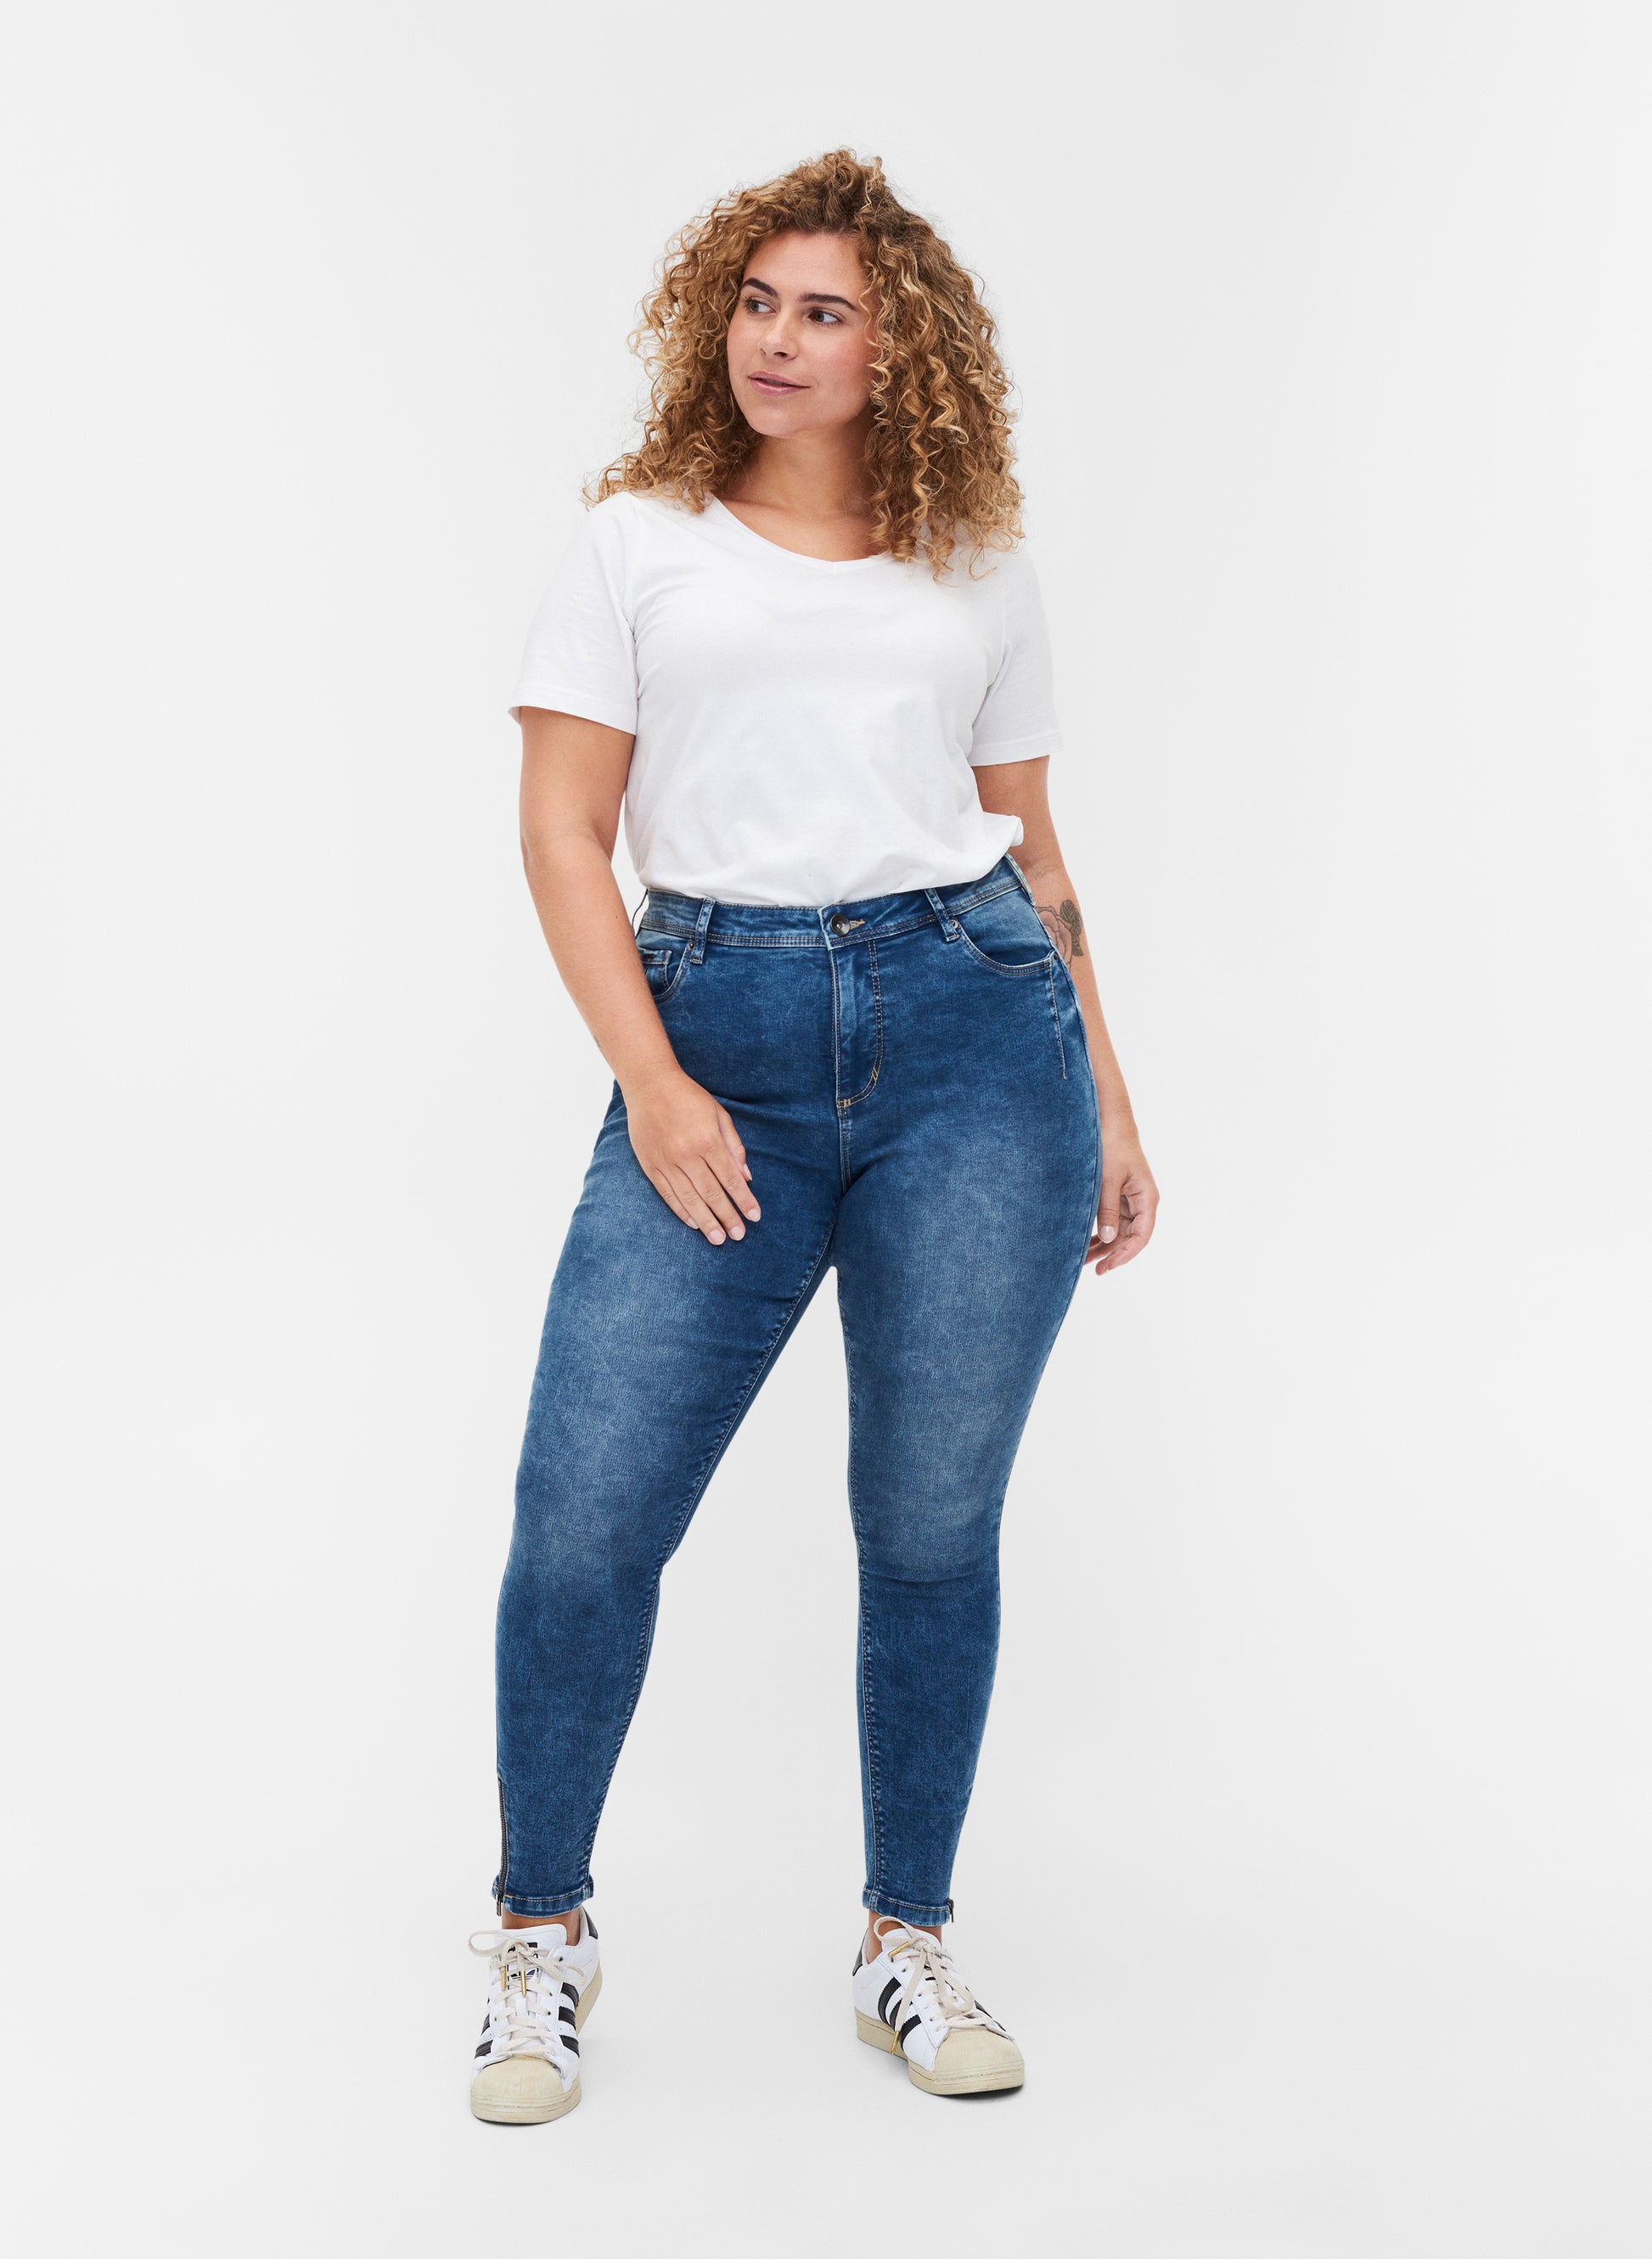 ZiAmy Cropped Jeans-Pluspige